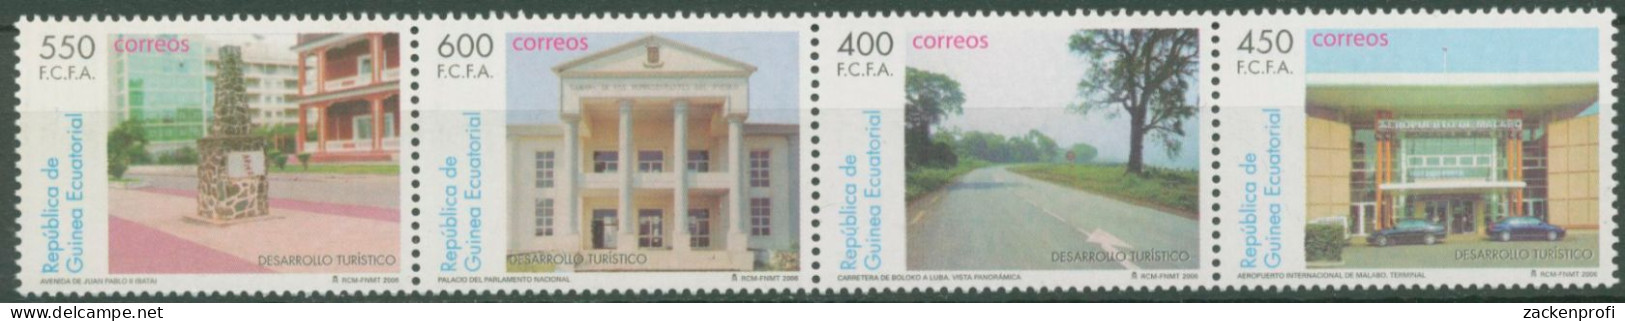 Äquatorialguinea 2006 Tourismus Bauwerke 1997/00 ZD Postfrisch (C62603) - Equatorial Guinea